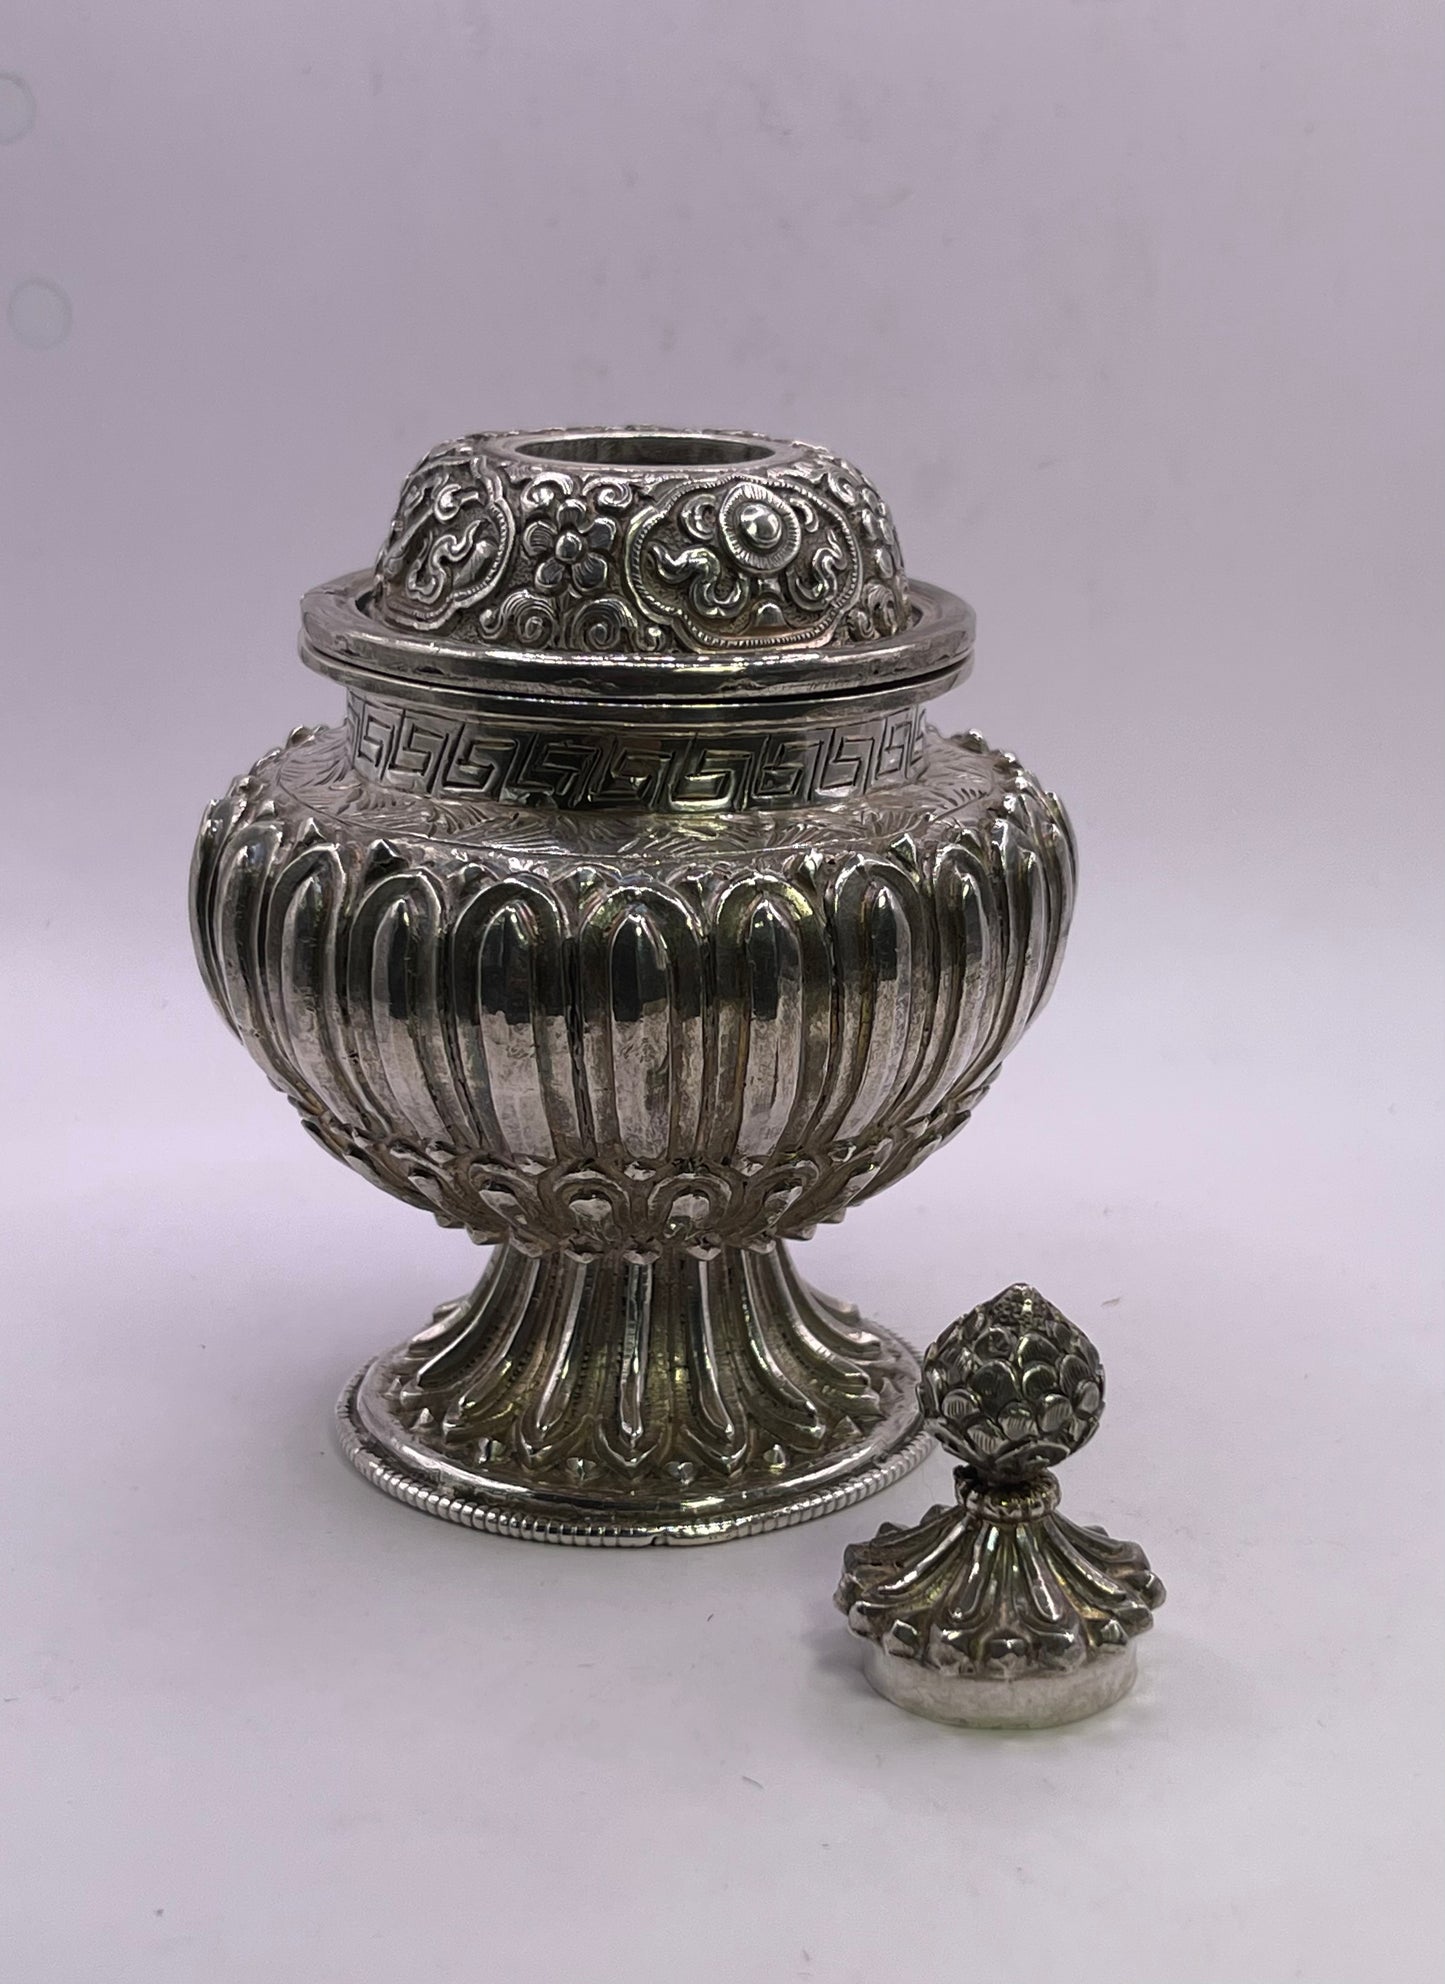 A vintage silver pot - bumpa